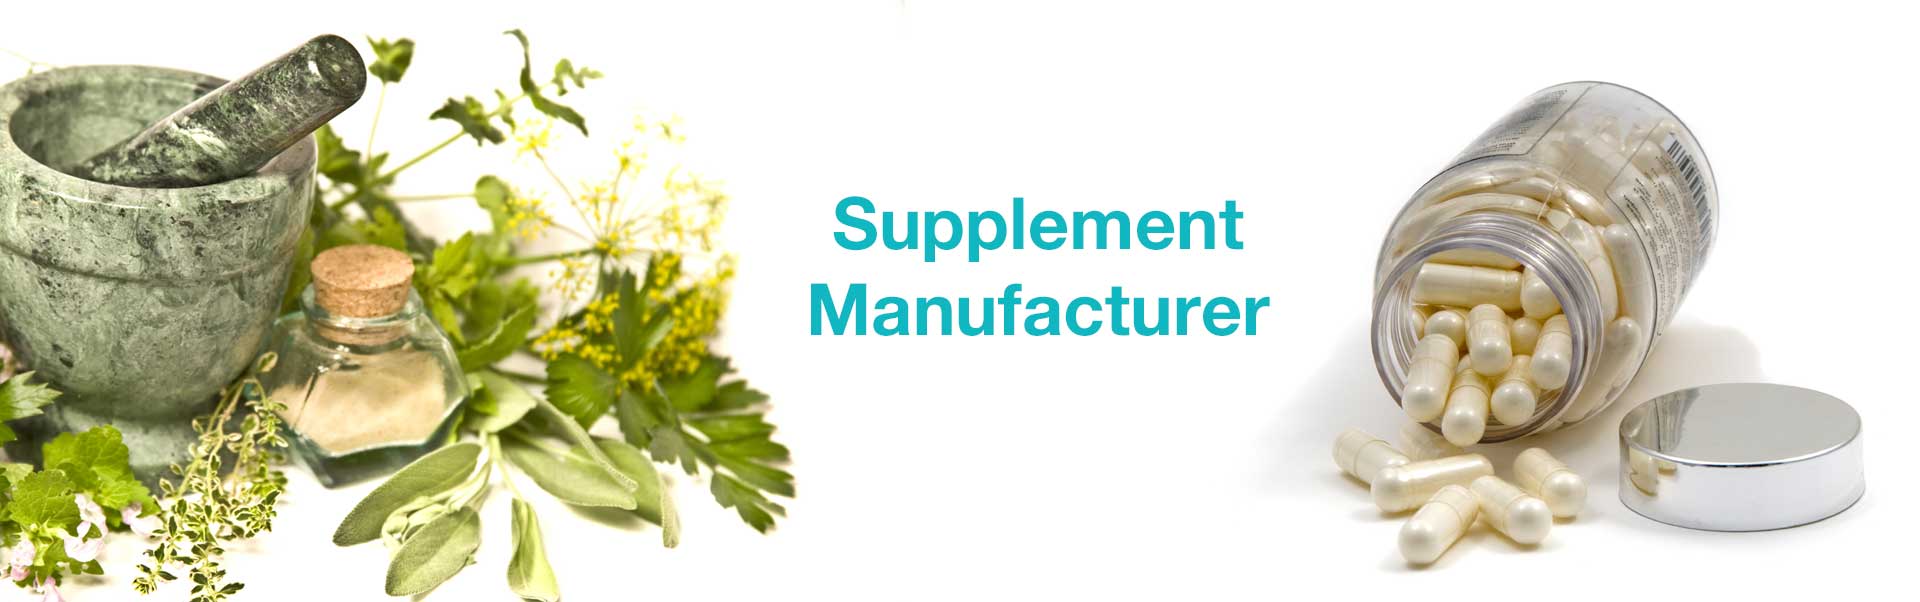 Supplement Manufacturer